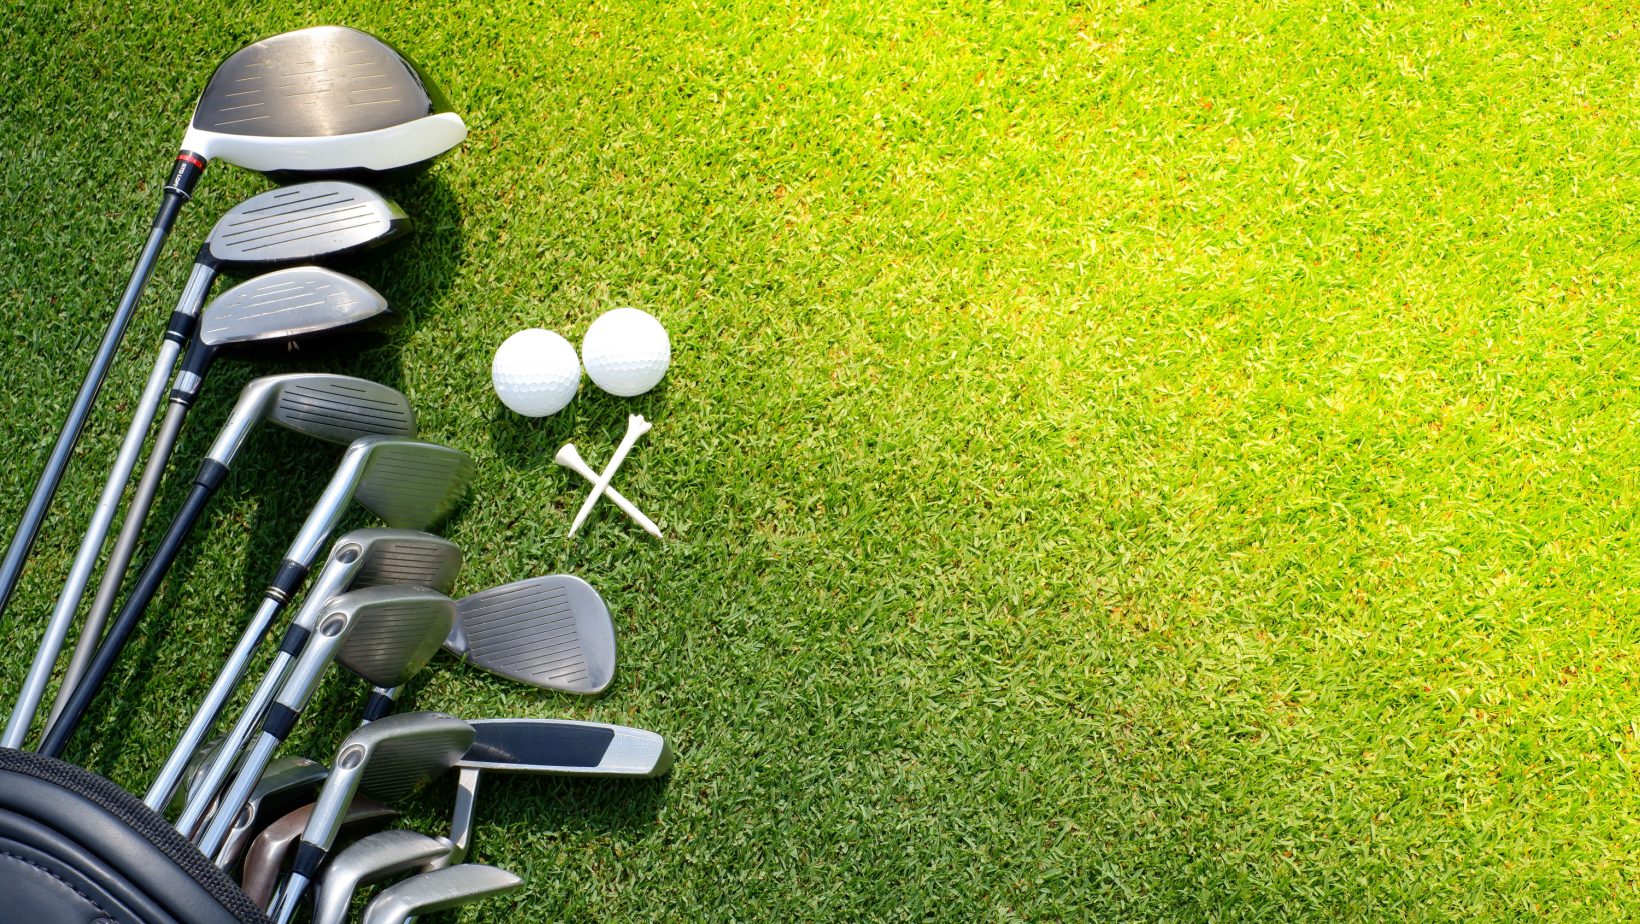 Cum sunt golful și performanța coechipieri